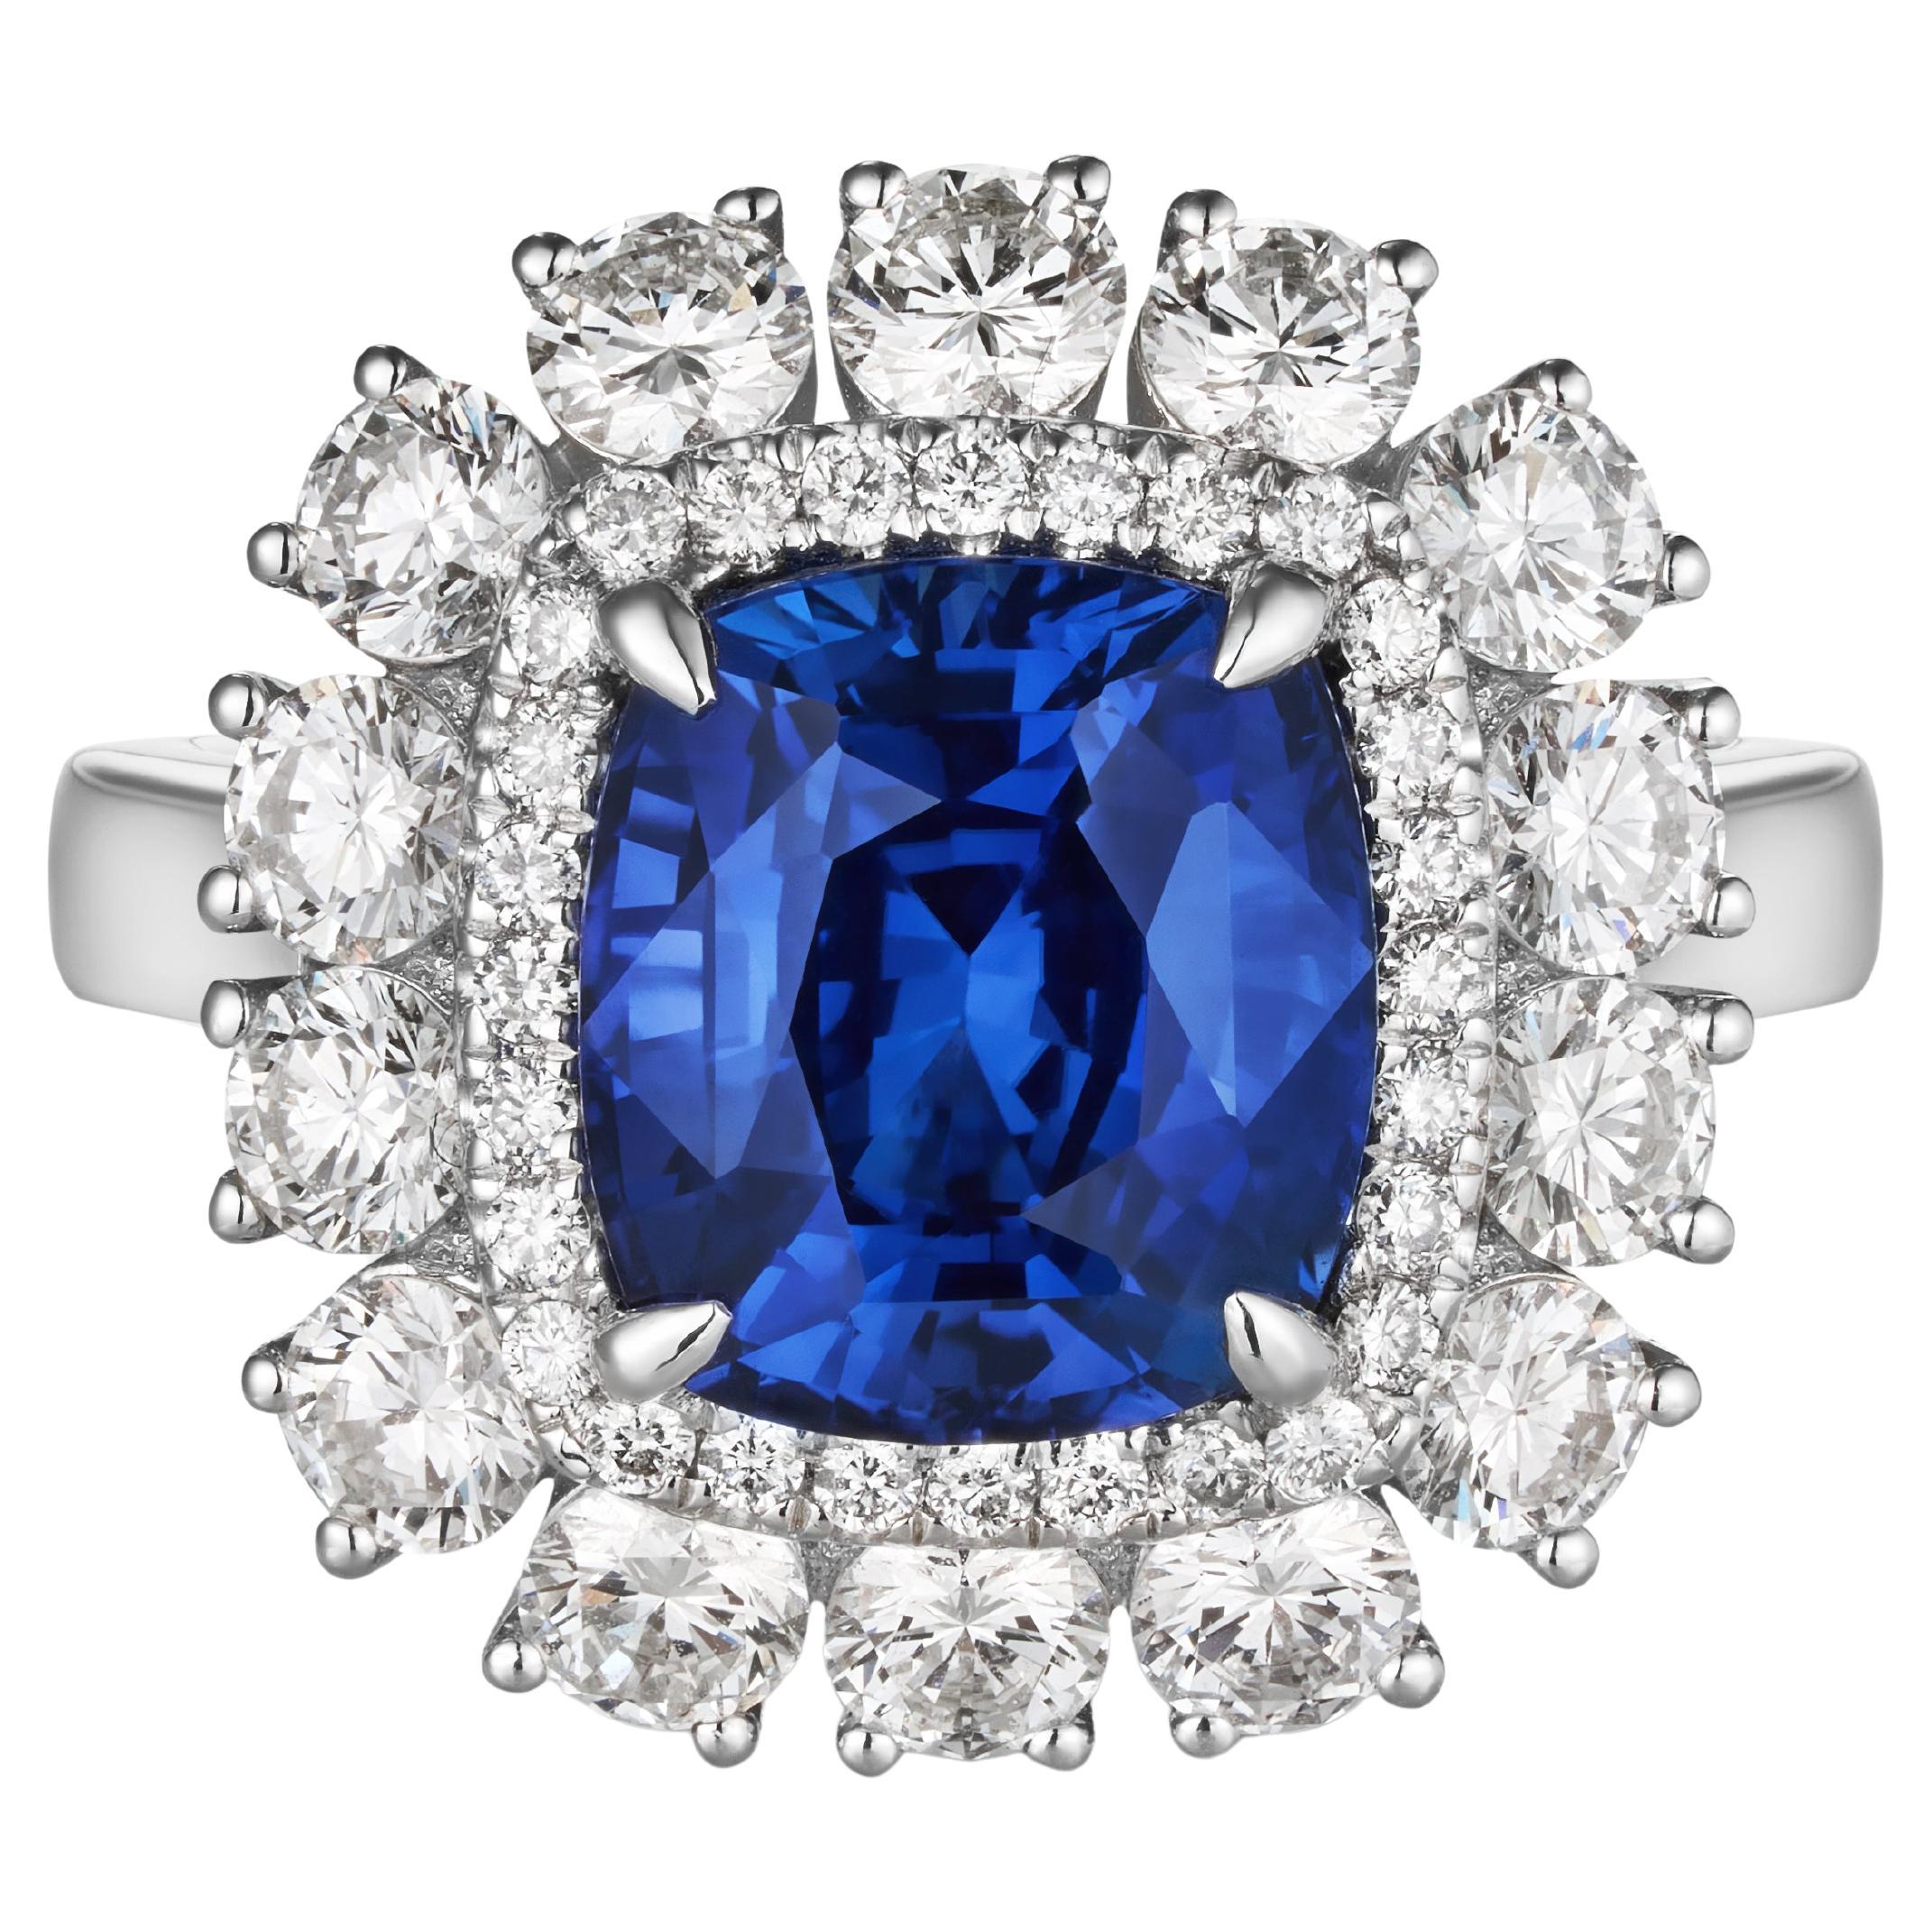 Bague et pendentif convertible en saphir bleu royal naturel de 5 carats et diamants 